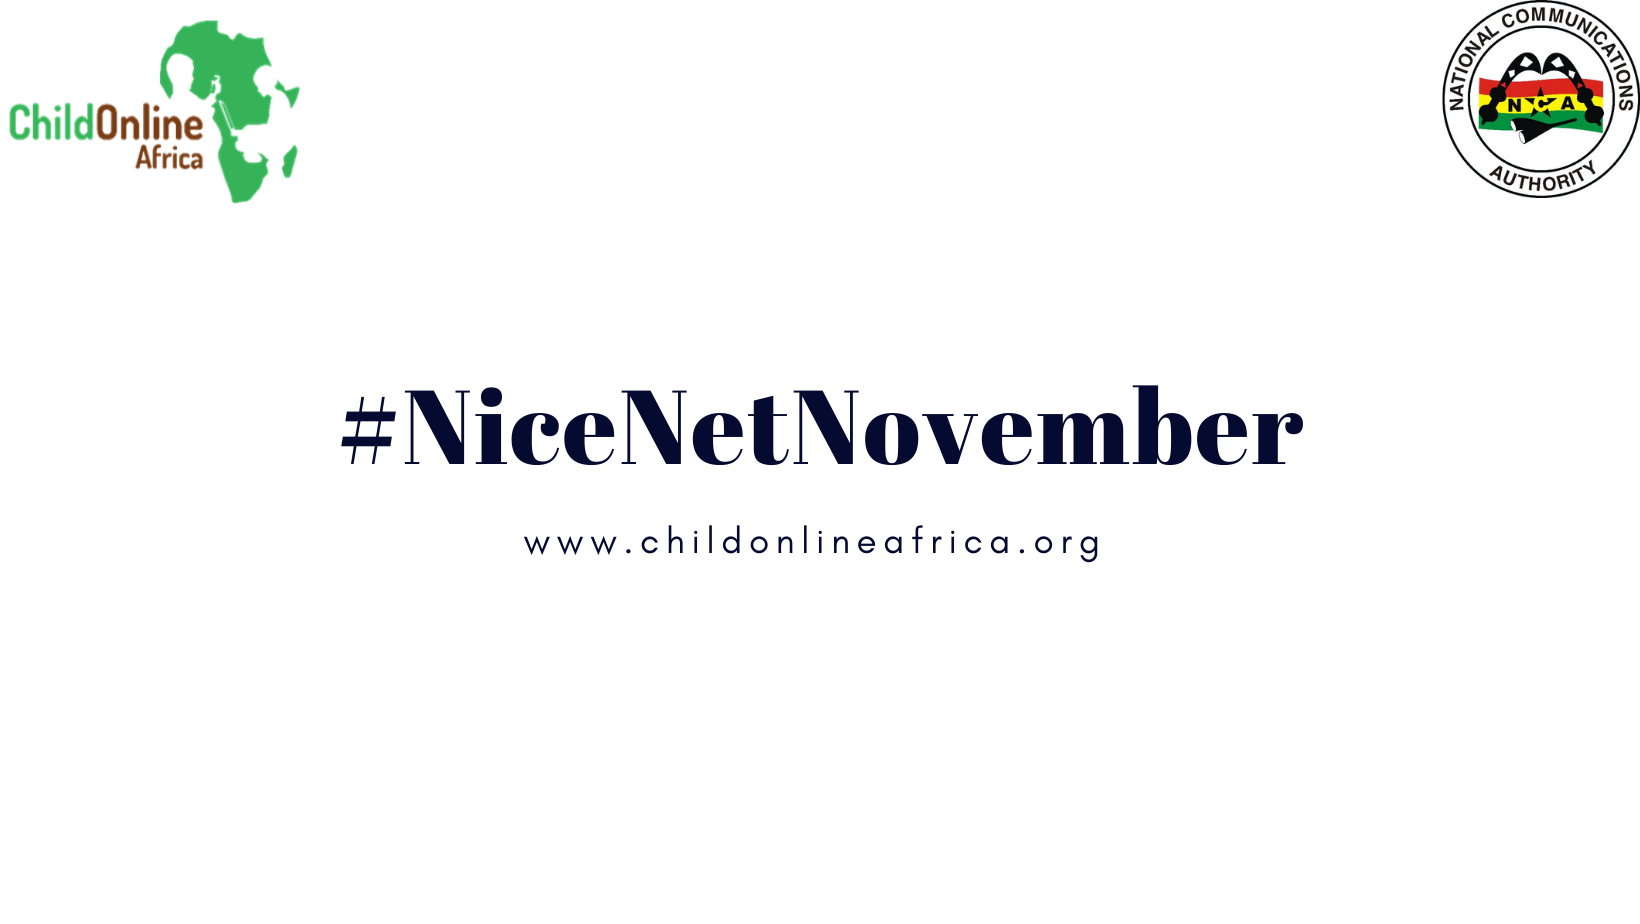 Child Online Africa launches #NiceNetNovember 2021